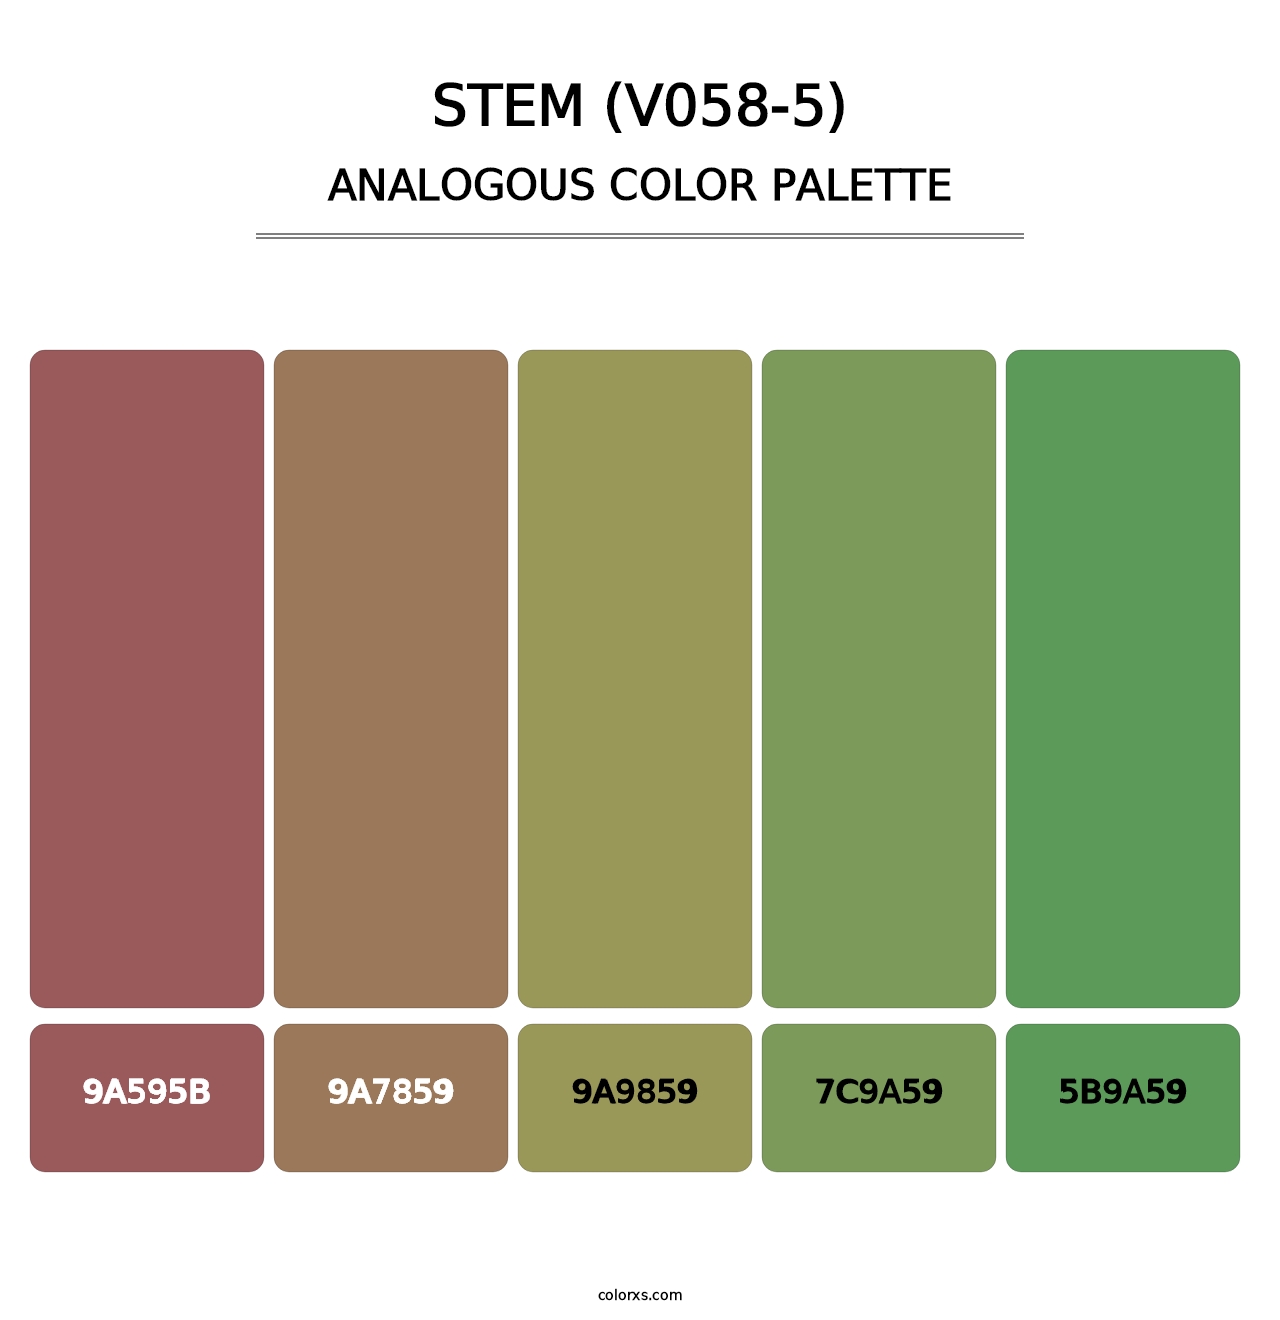 Stem (V058-5) - Analogous Color Palette